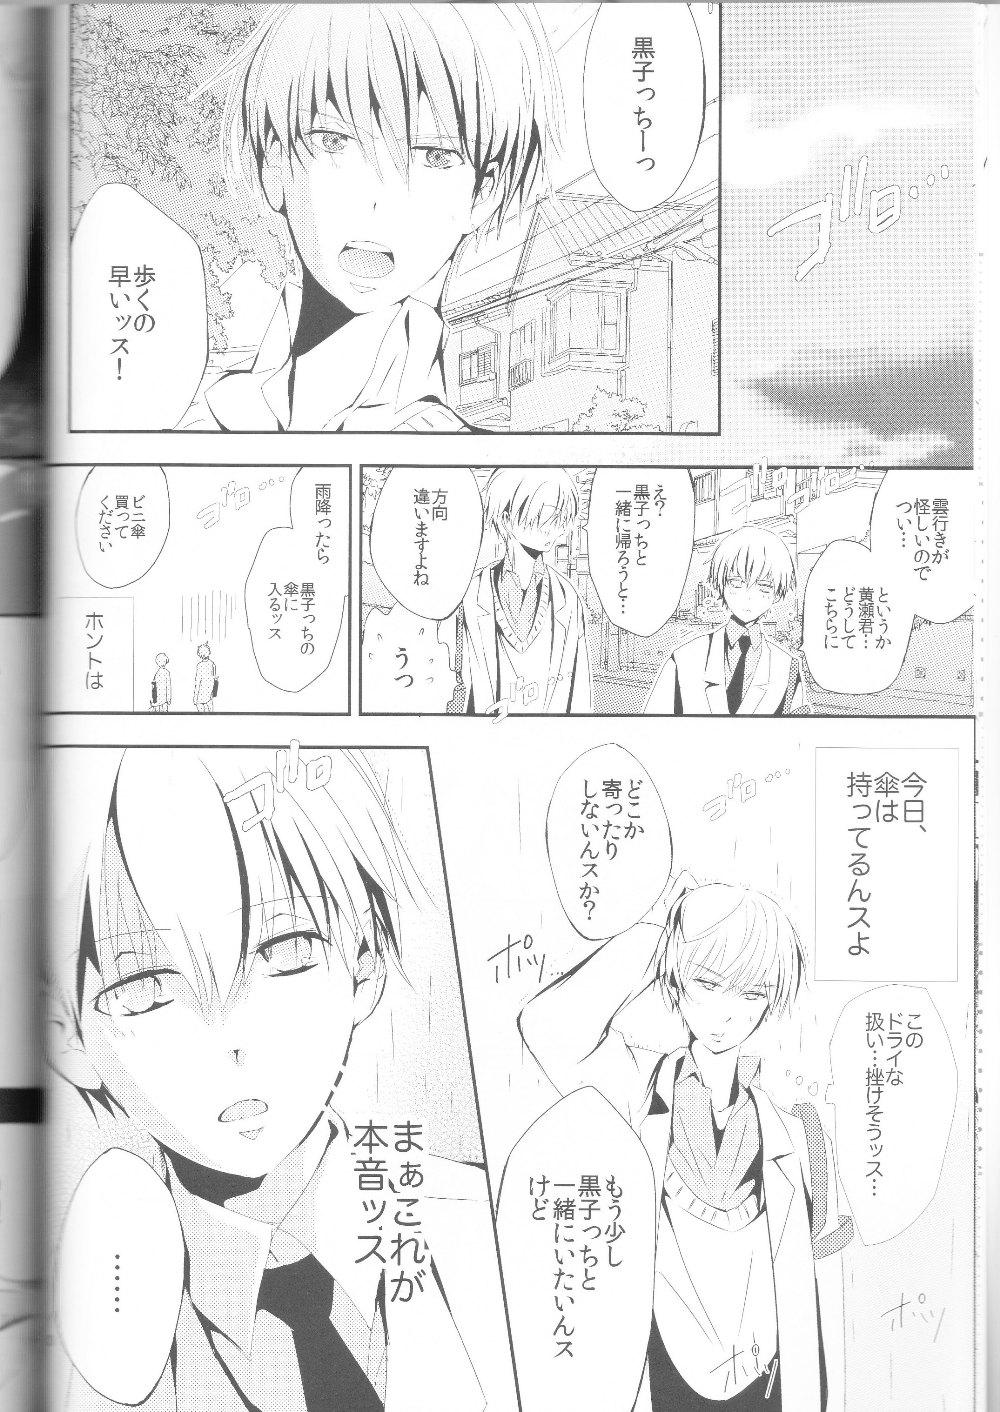 Mallu Kisekise × Kuroko 3P - Kuroko no basuke Raw - Page 11